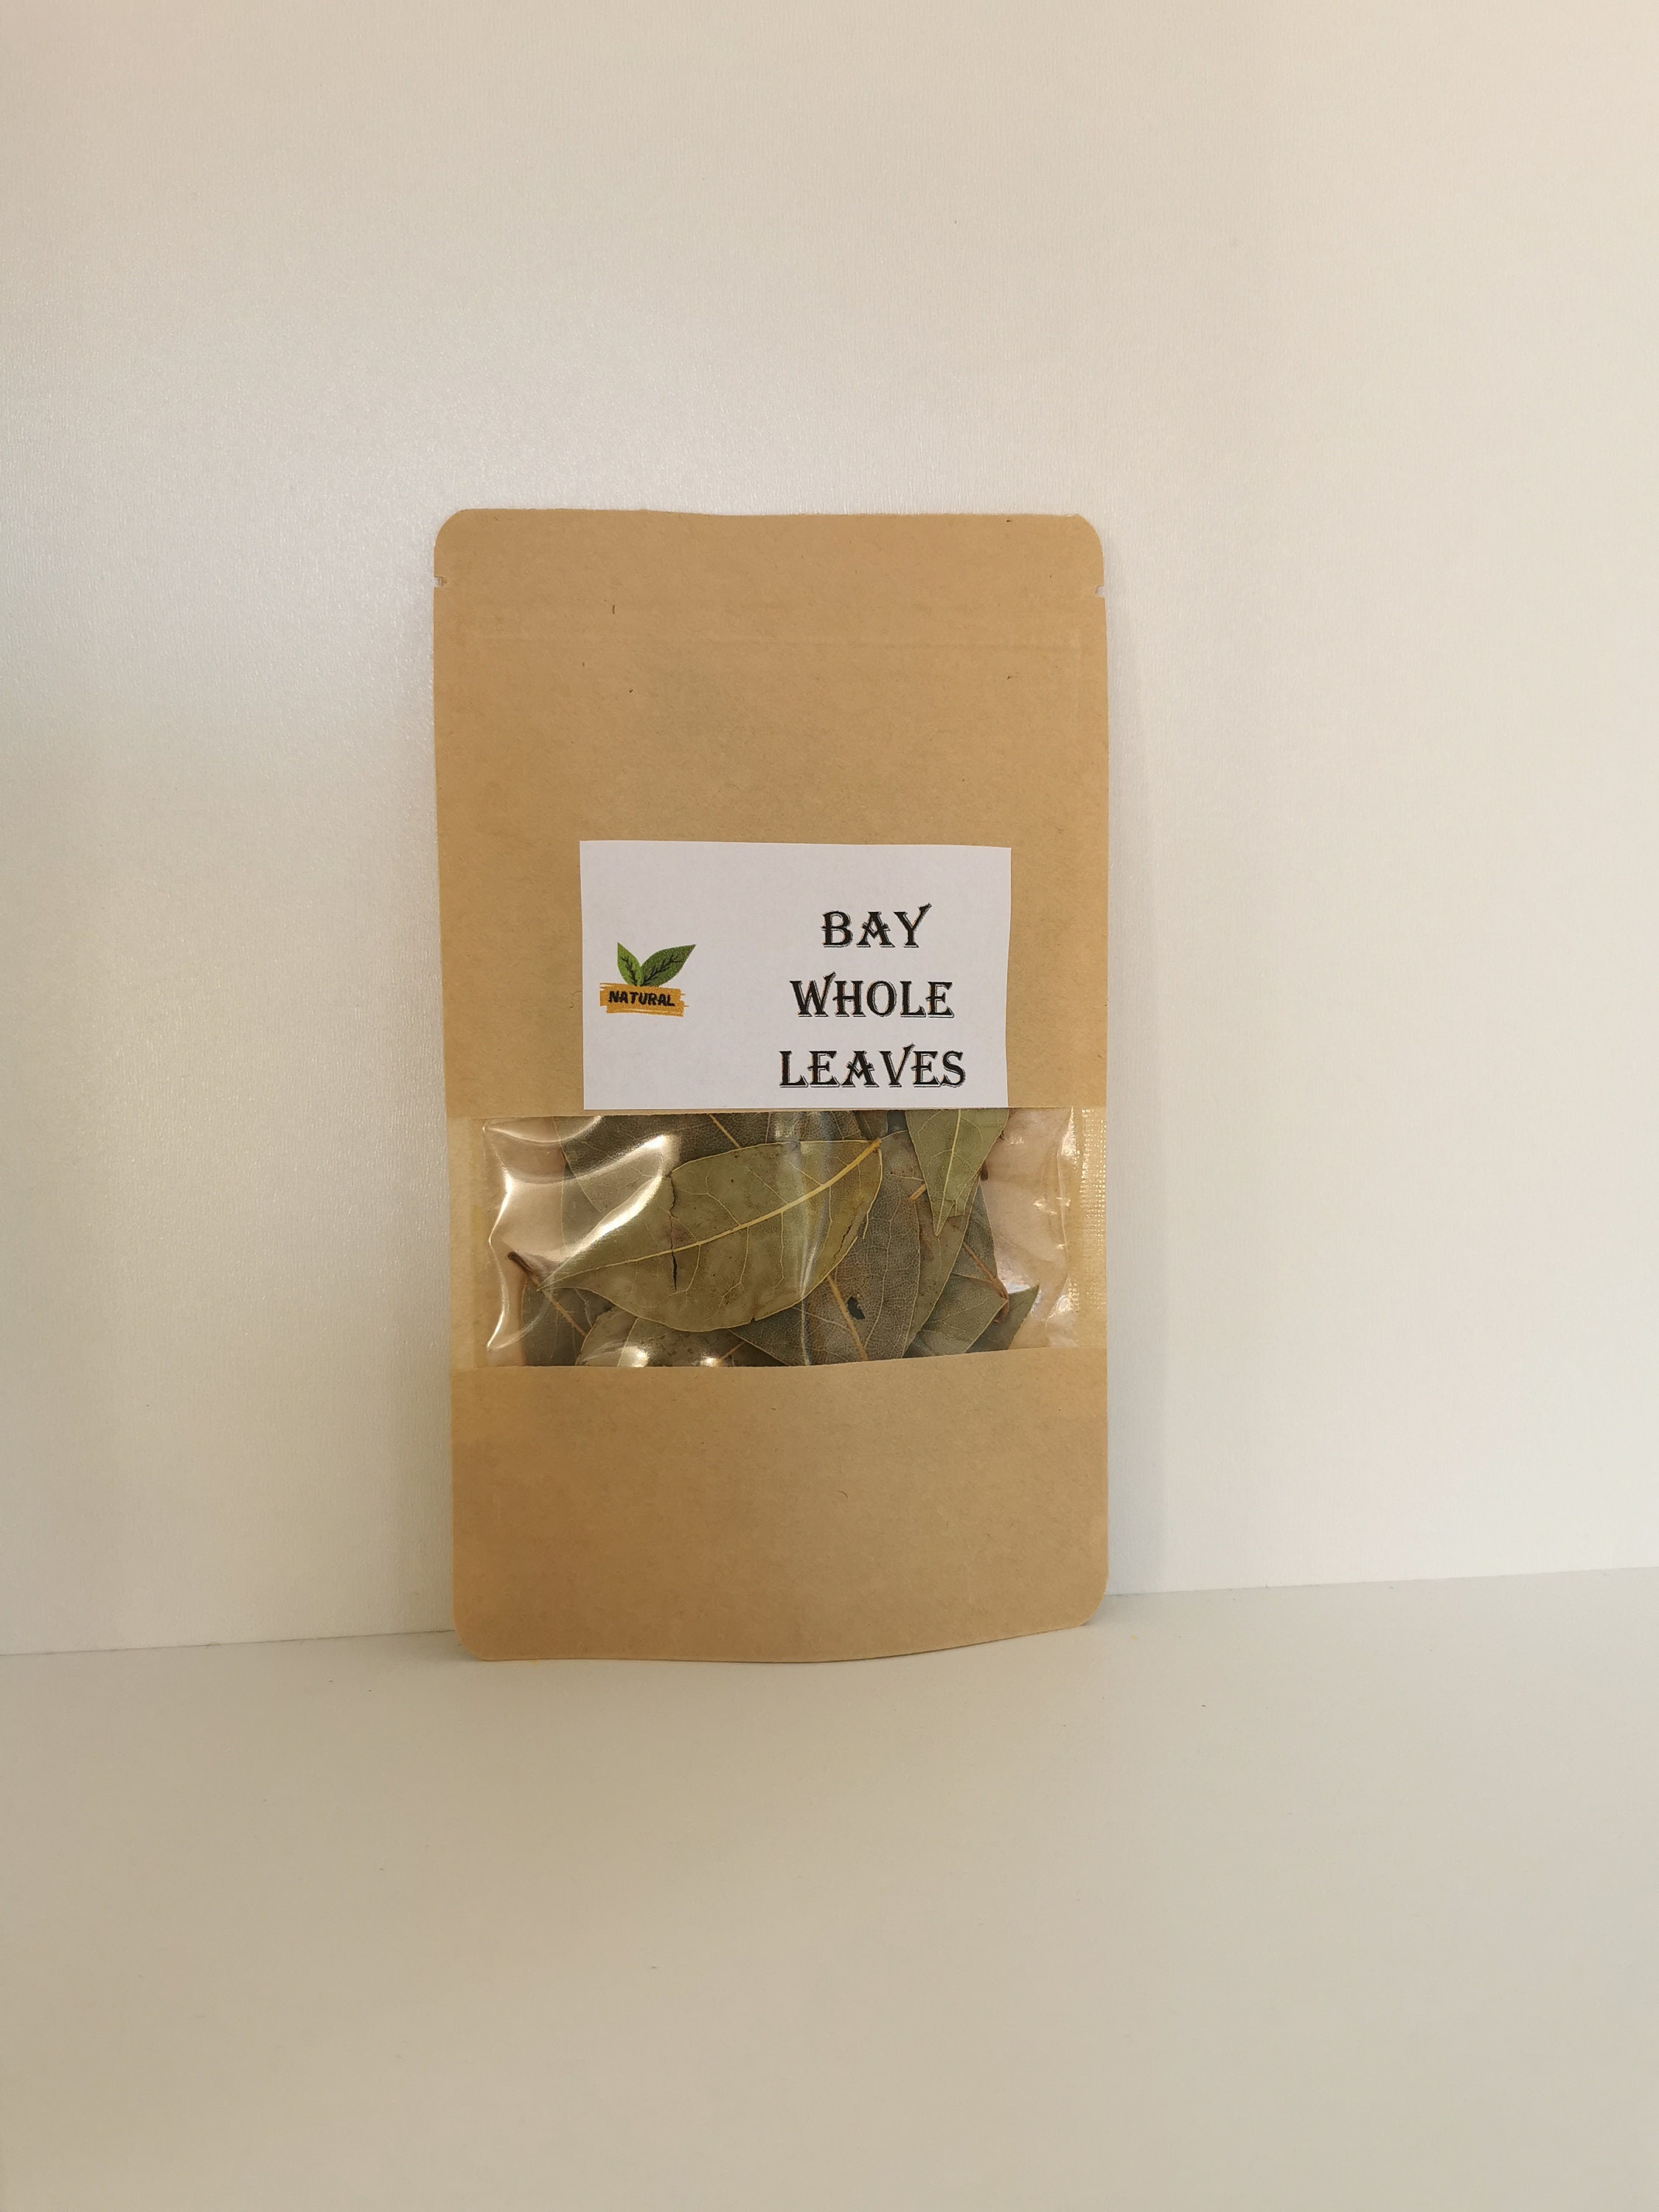 Bay Leaf Whole Bulk 6Oz To 1lb | Leaves| Natural Herbalist Dried Herbs Botanical Metaphysical